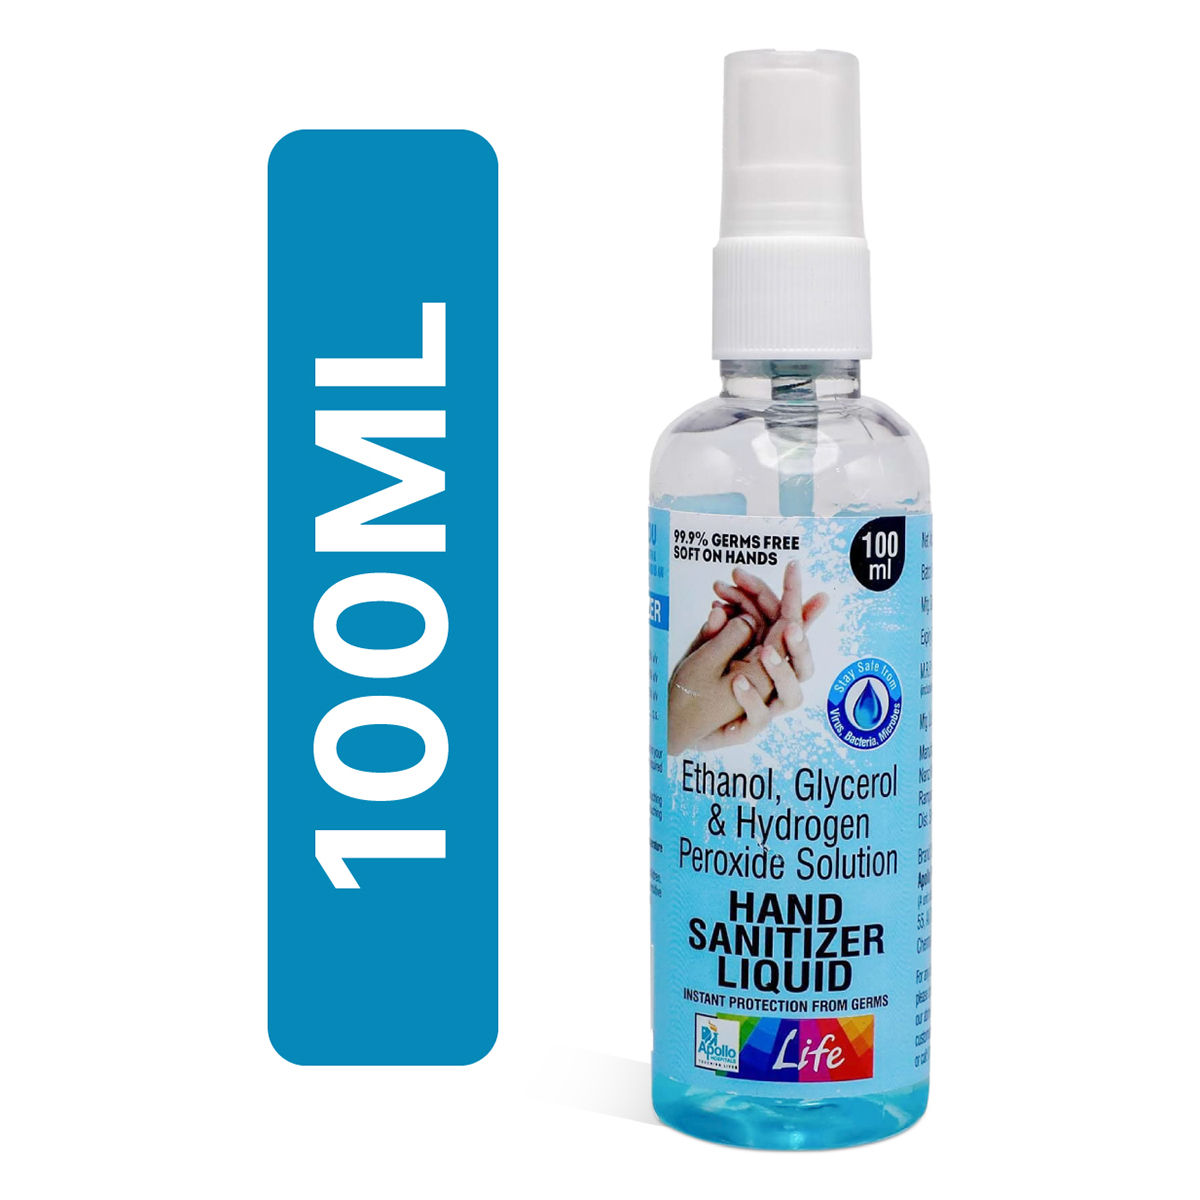 Buy Apollo Life Hand Sanitizer Liquid Spray 100 ml, 3 Count Online